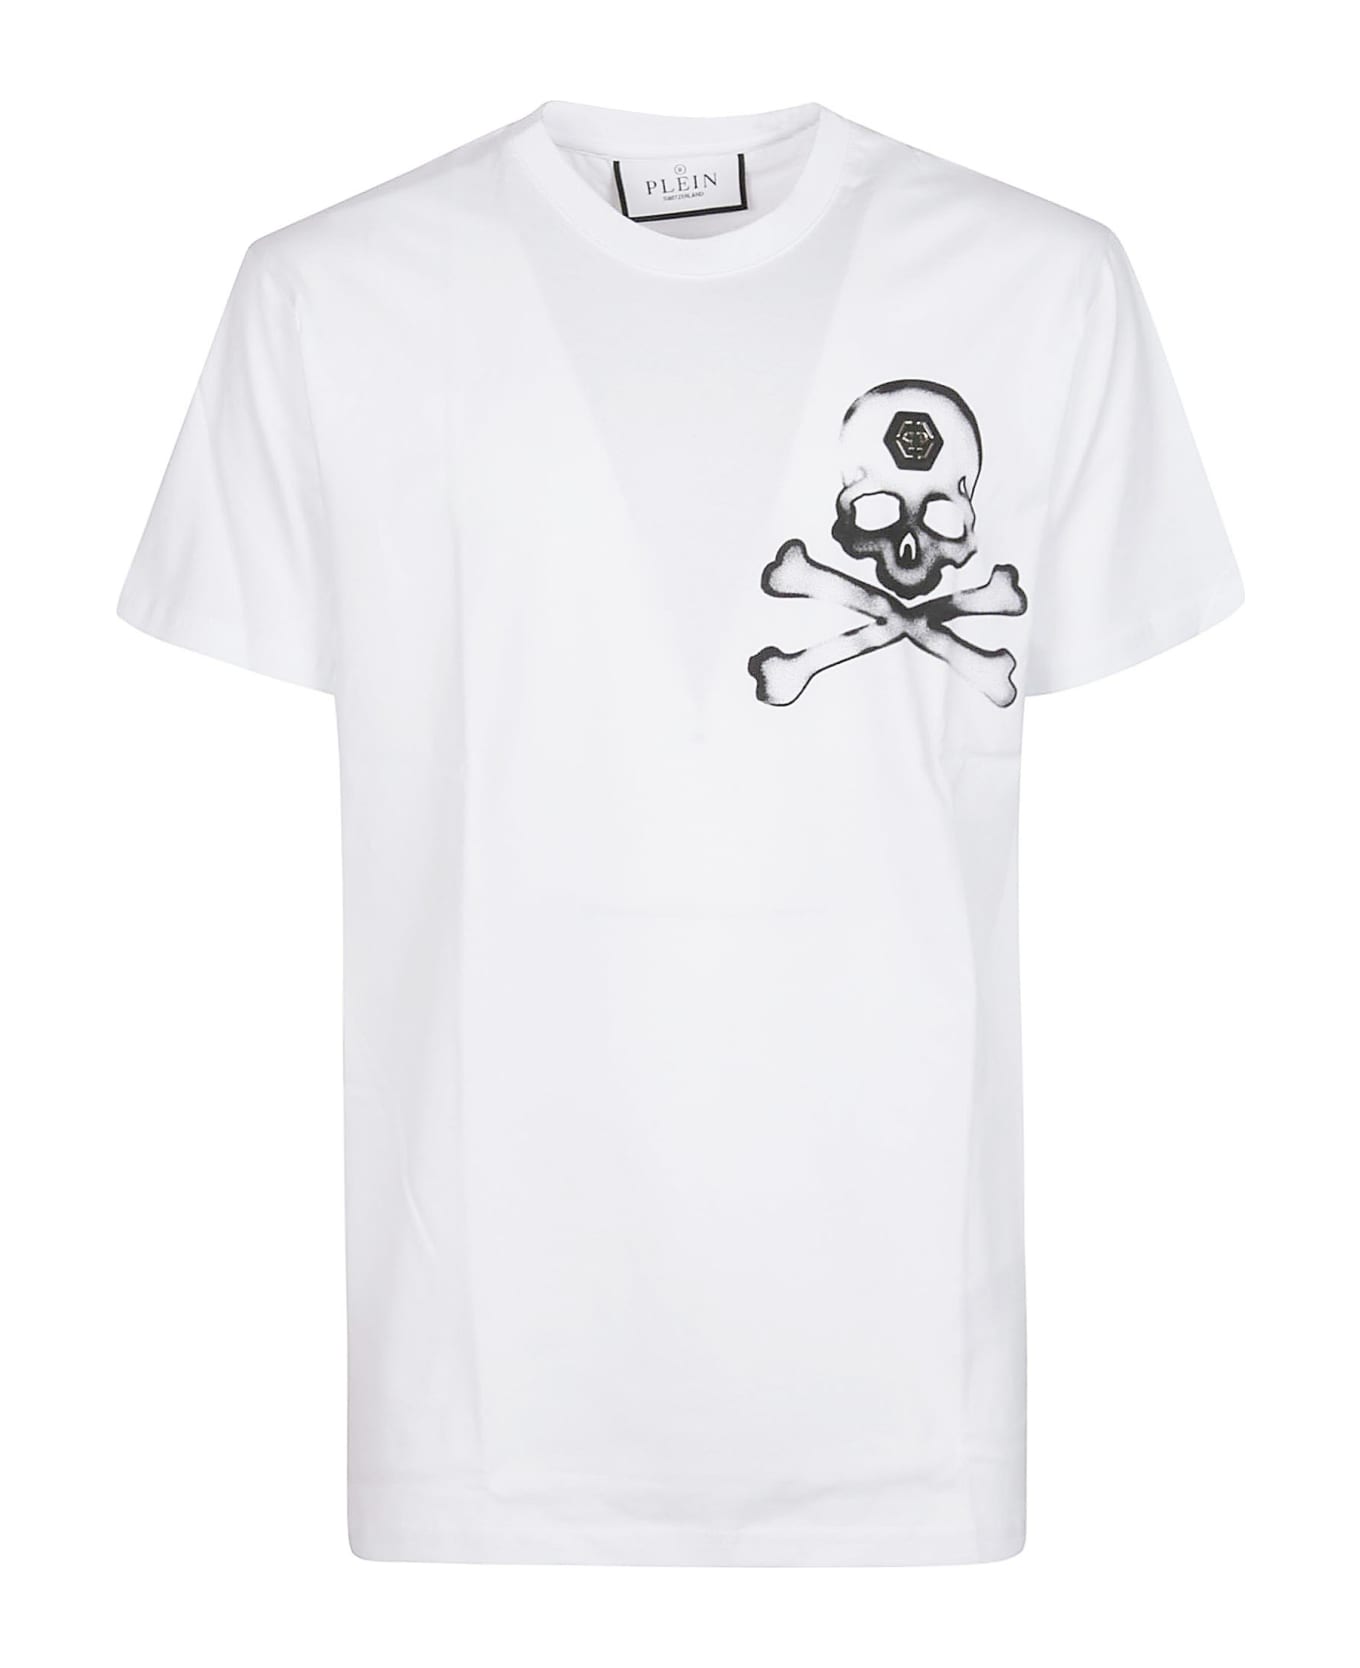 Philipp Plein Gothic Plein T-shirt - White シャツ